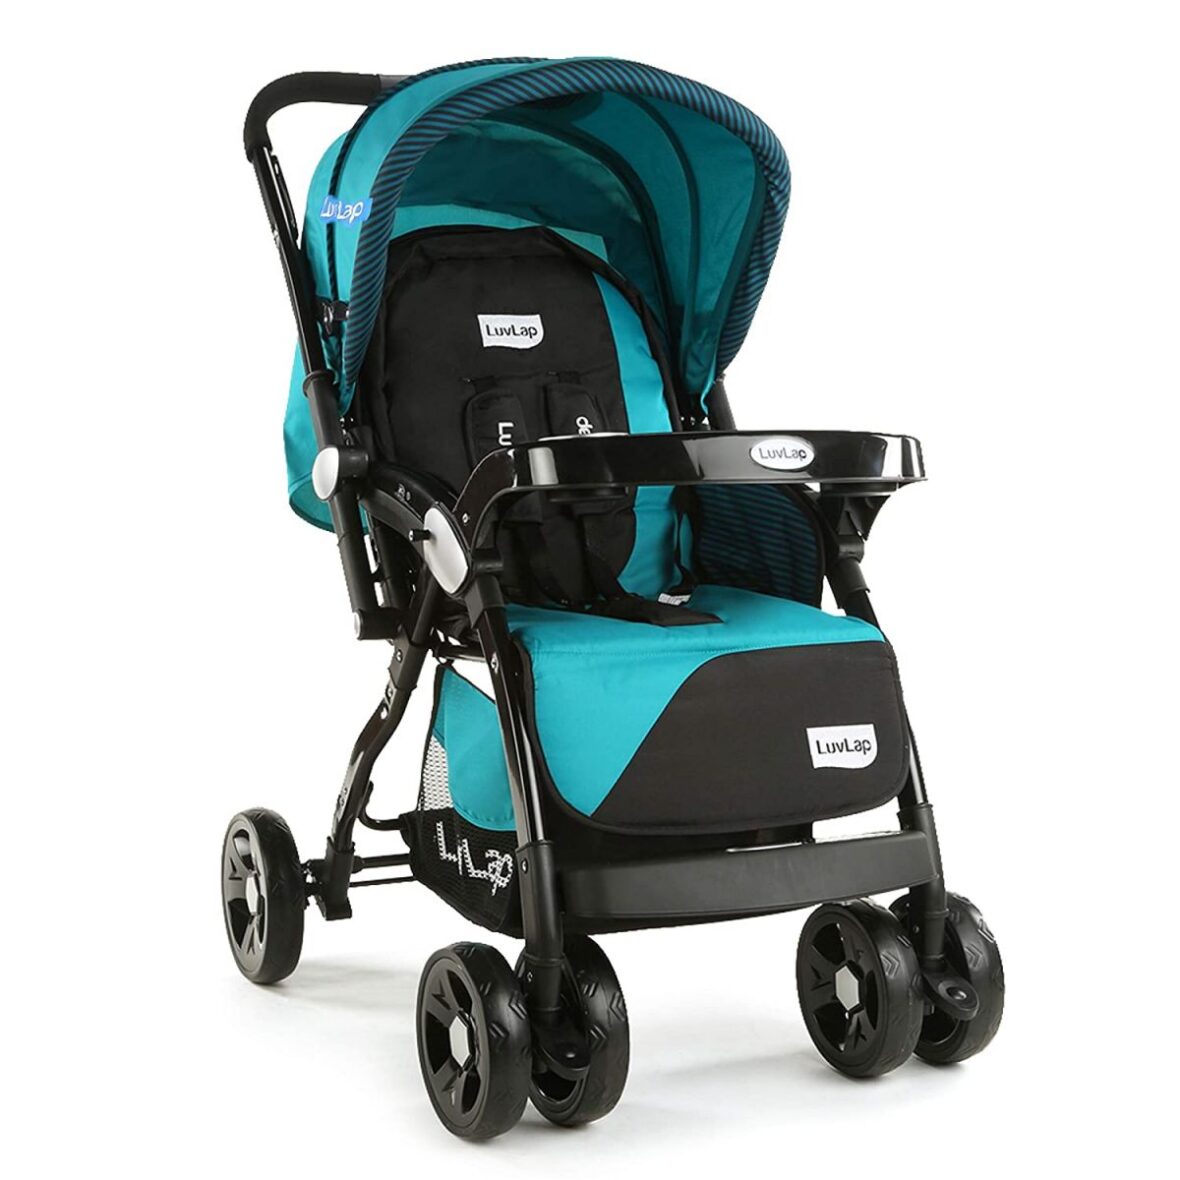 LuvLap Galaxy Stroller / Pram, Extra Large Seating Space, Easy Fold, for Newborn Baby / Kids, 0-3 years (Green/Black)